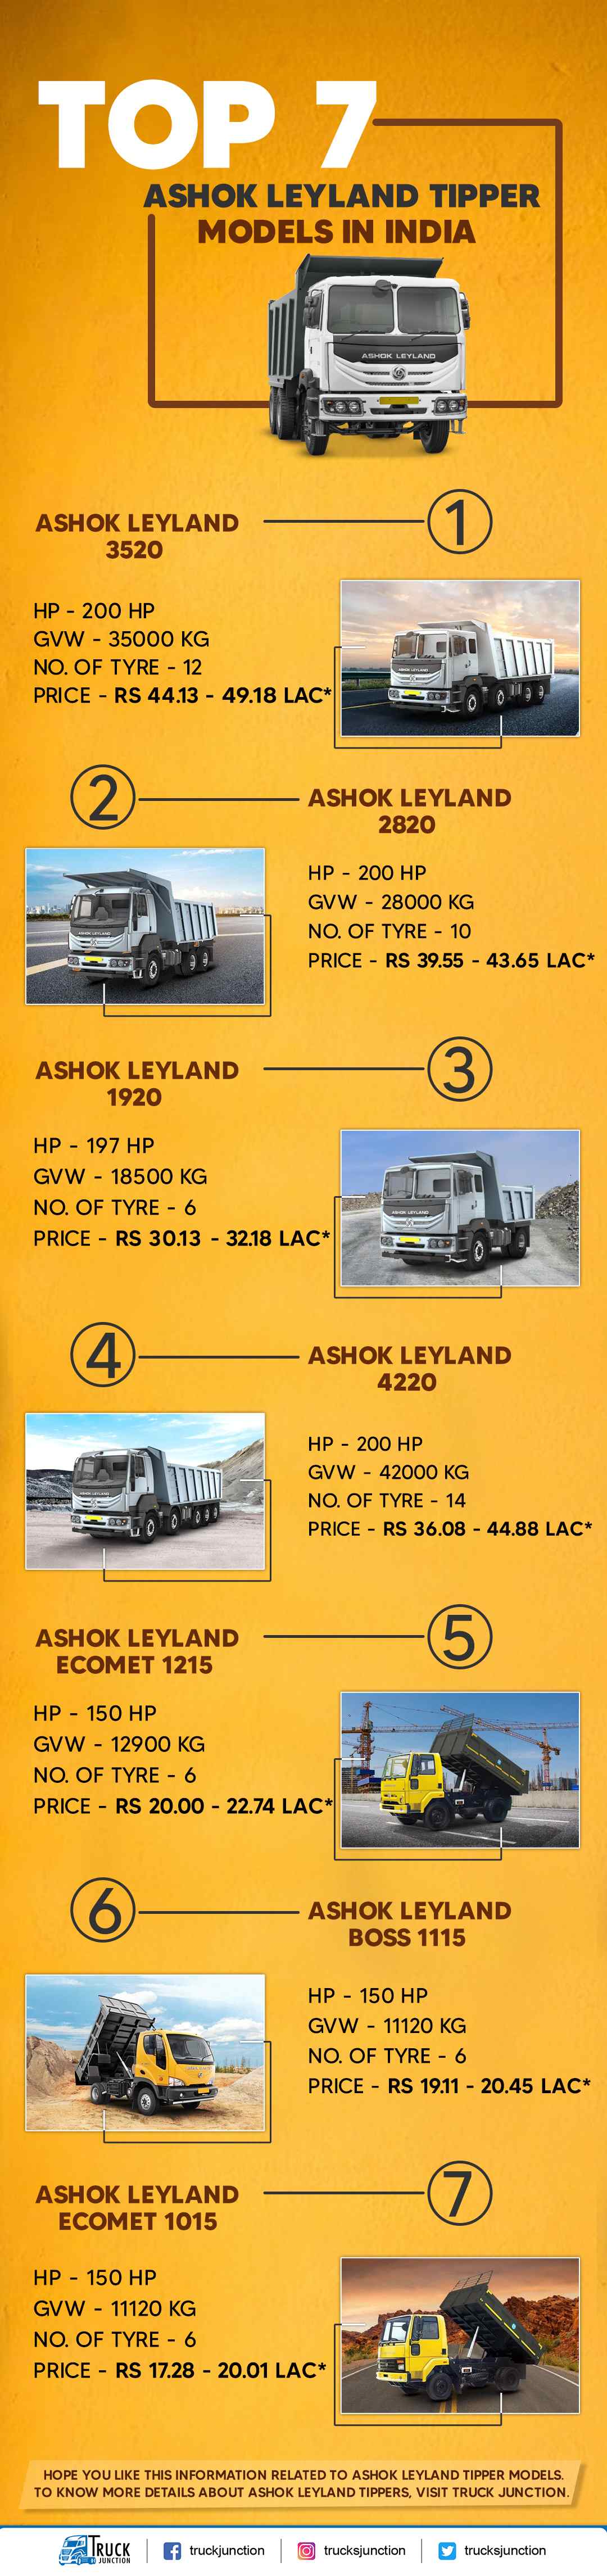 Top 7 Ashok Leyland Tipper Infographic